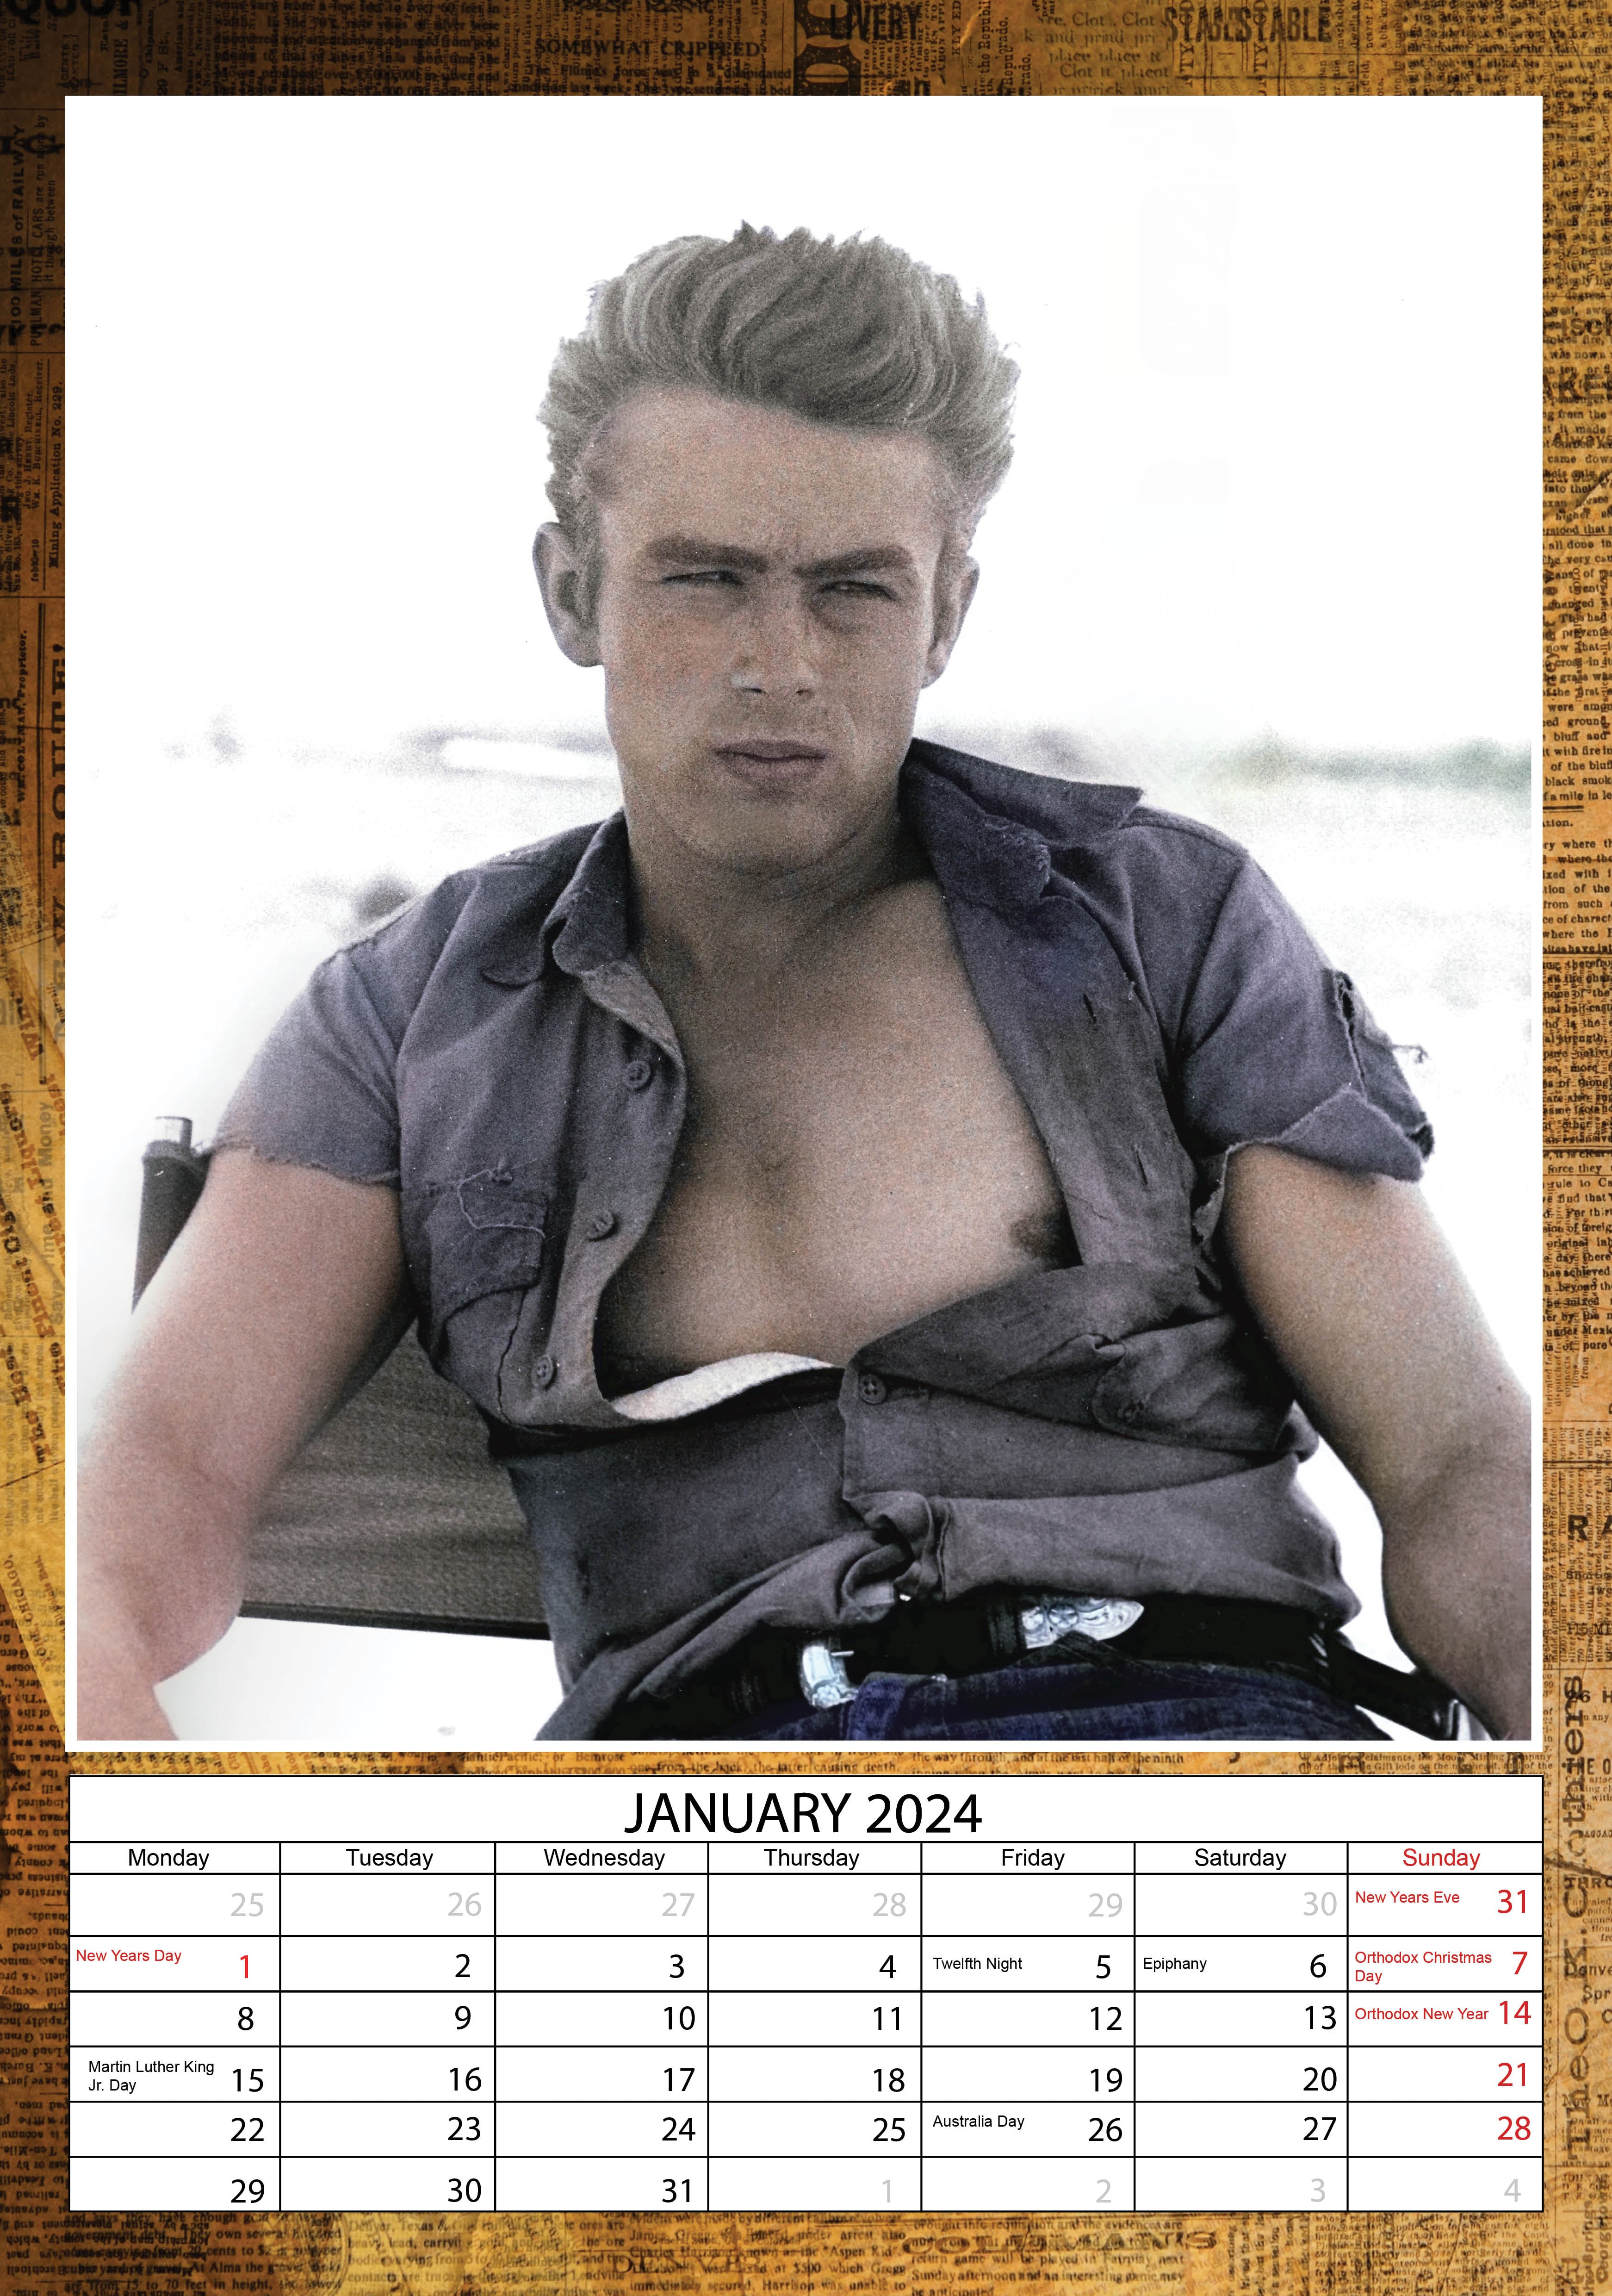 2024 James Dean - A3 Wall Calendar